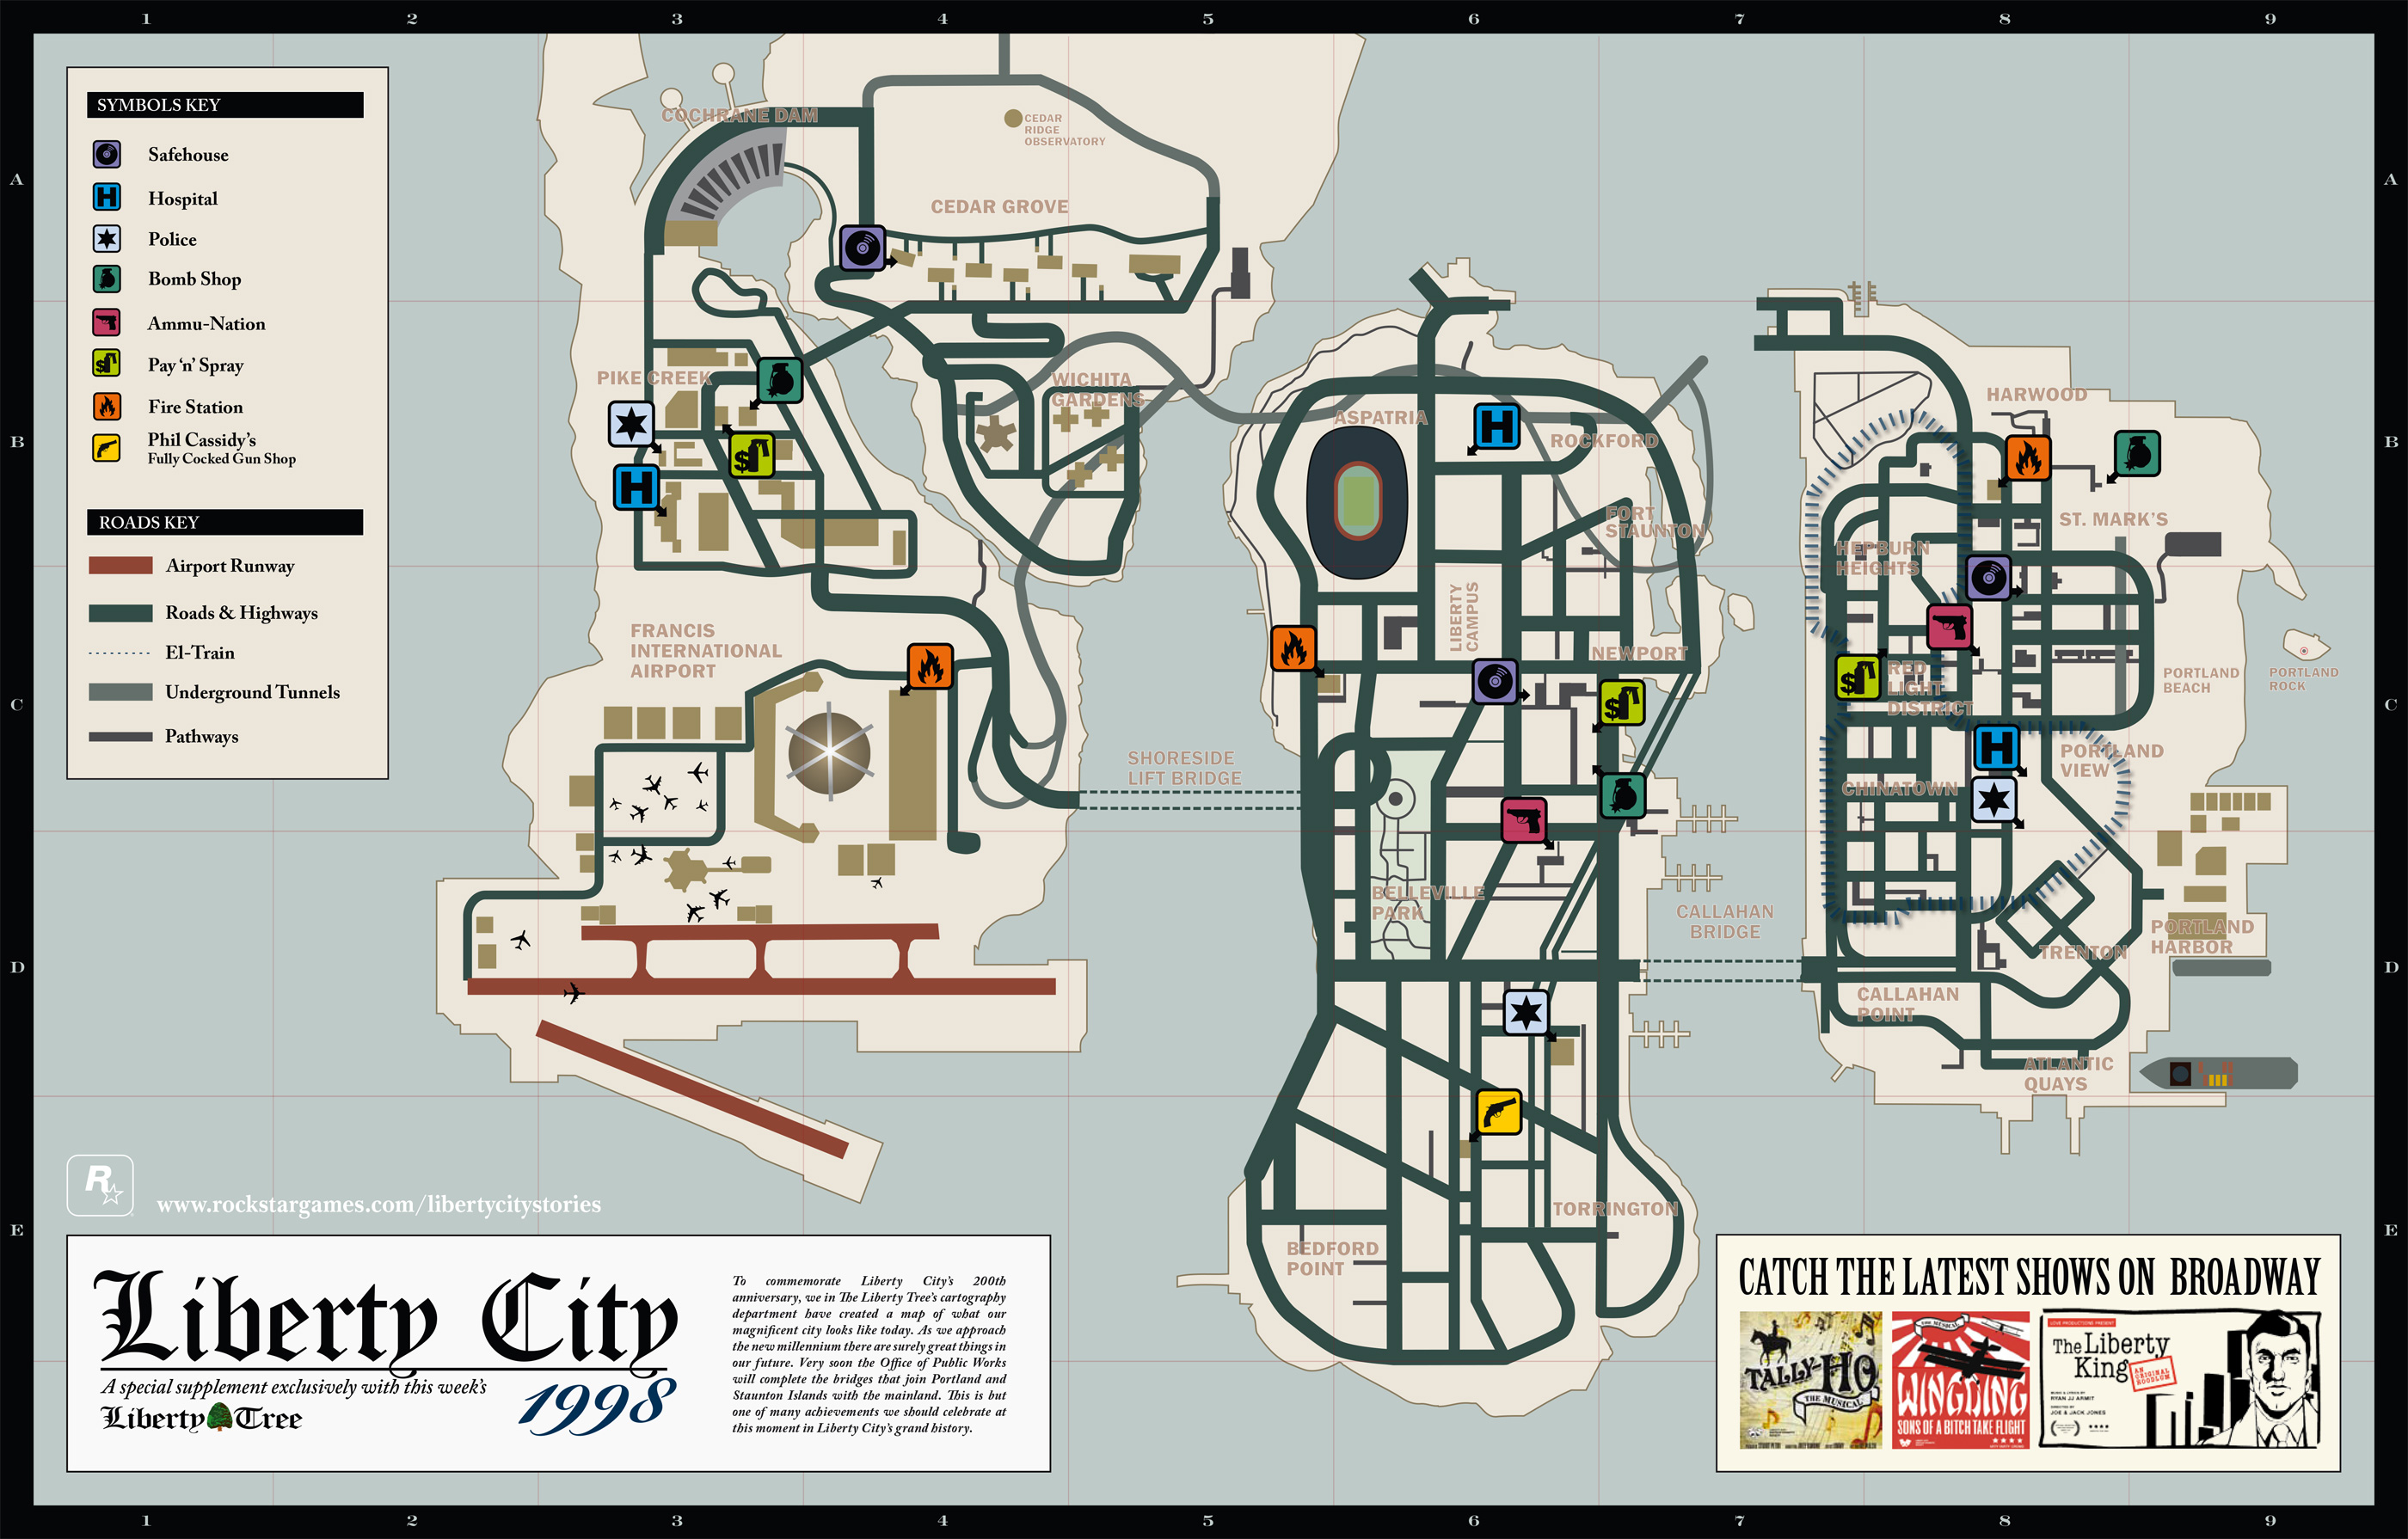 East Los Santos in GTA III Era - Grand Theft Wiki, the GTA wiki